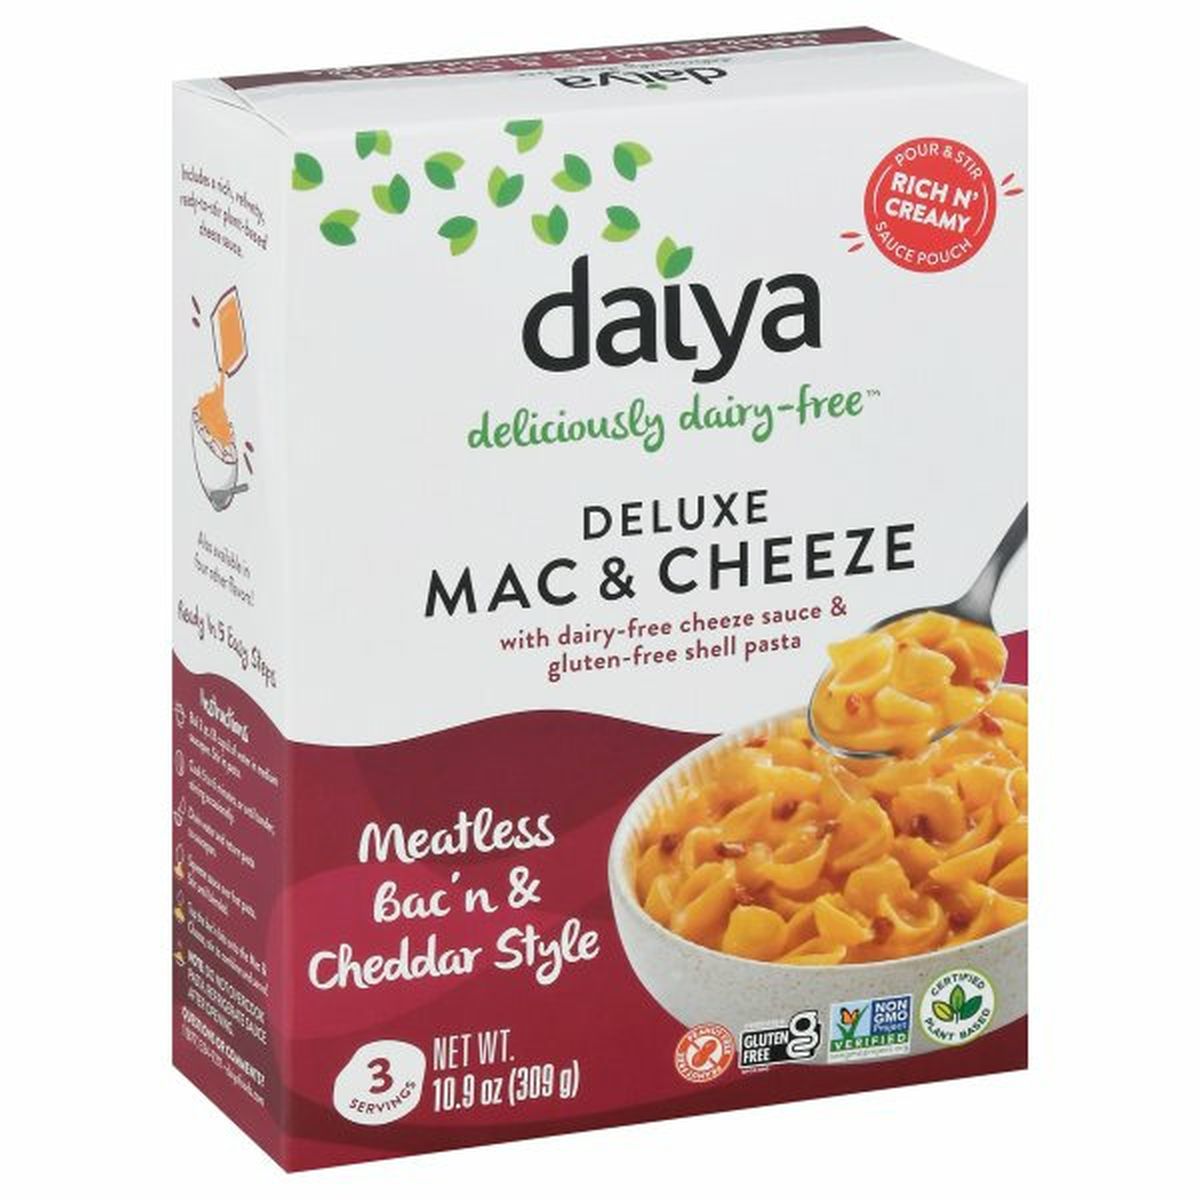 Calories in Daiya Cheezy Mac, Deluxe, Meatless Bac'n & Cheddar Style